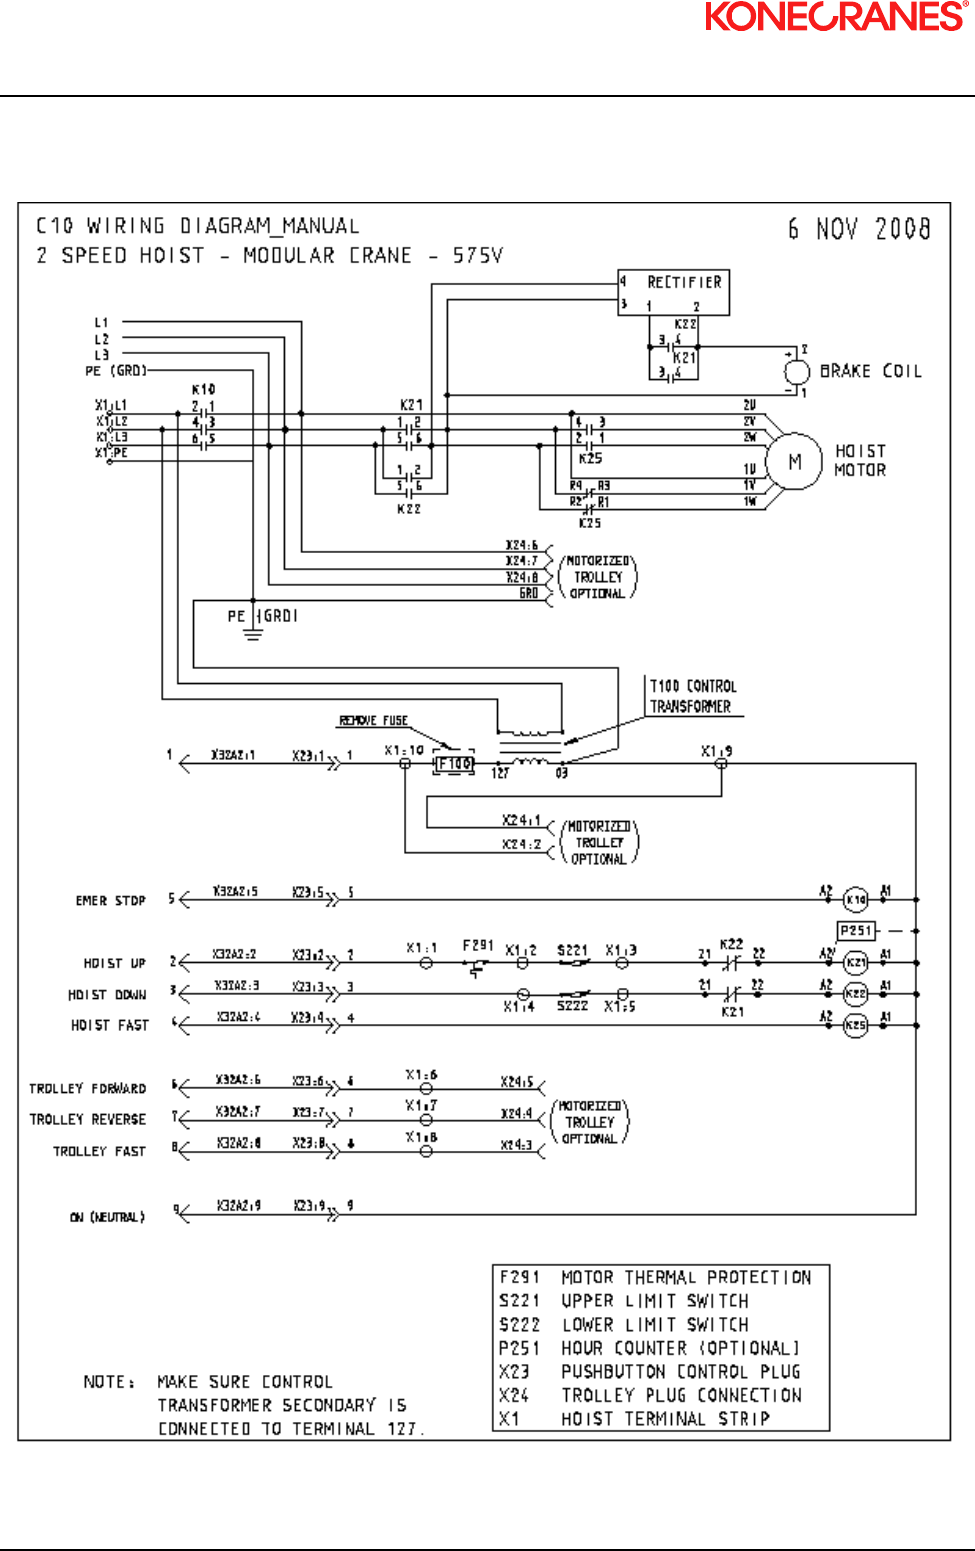 54 Hoist Motor Wiring Diagram - Wiring Diagram Harness